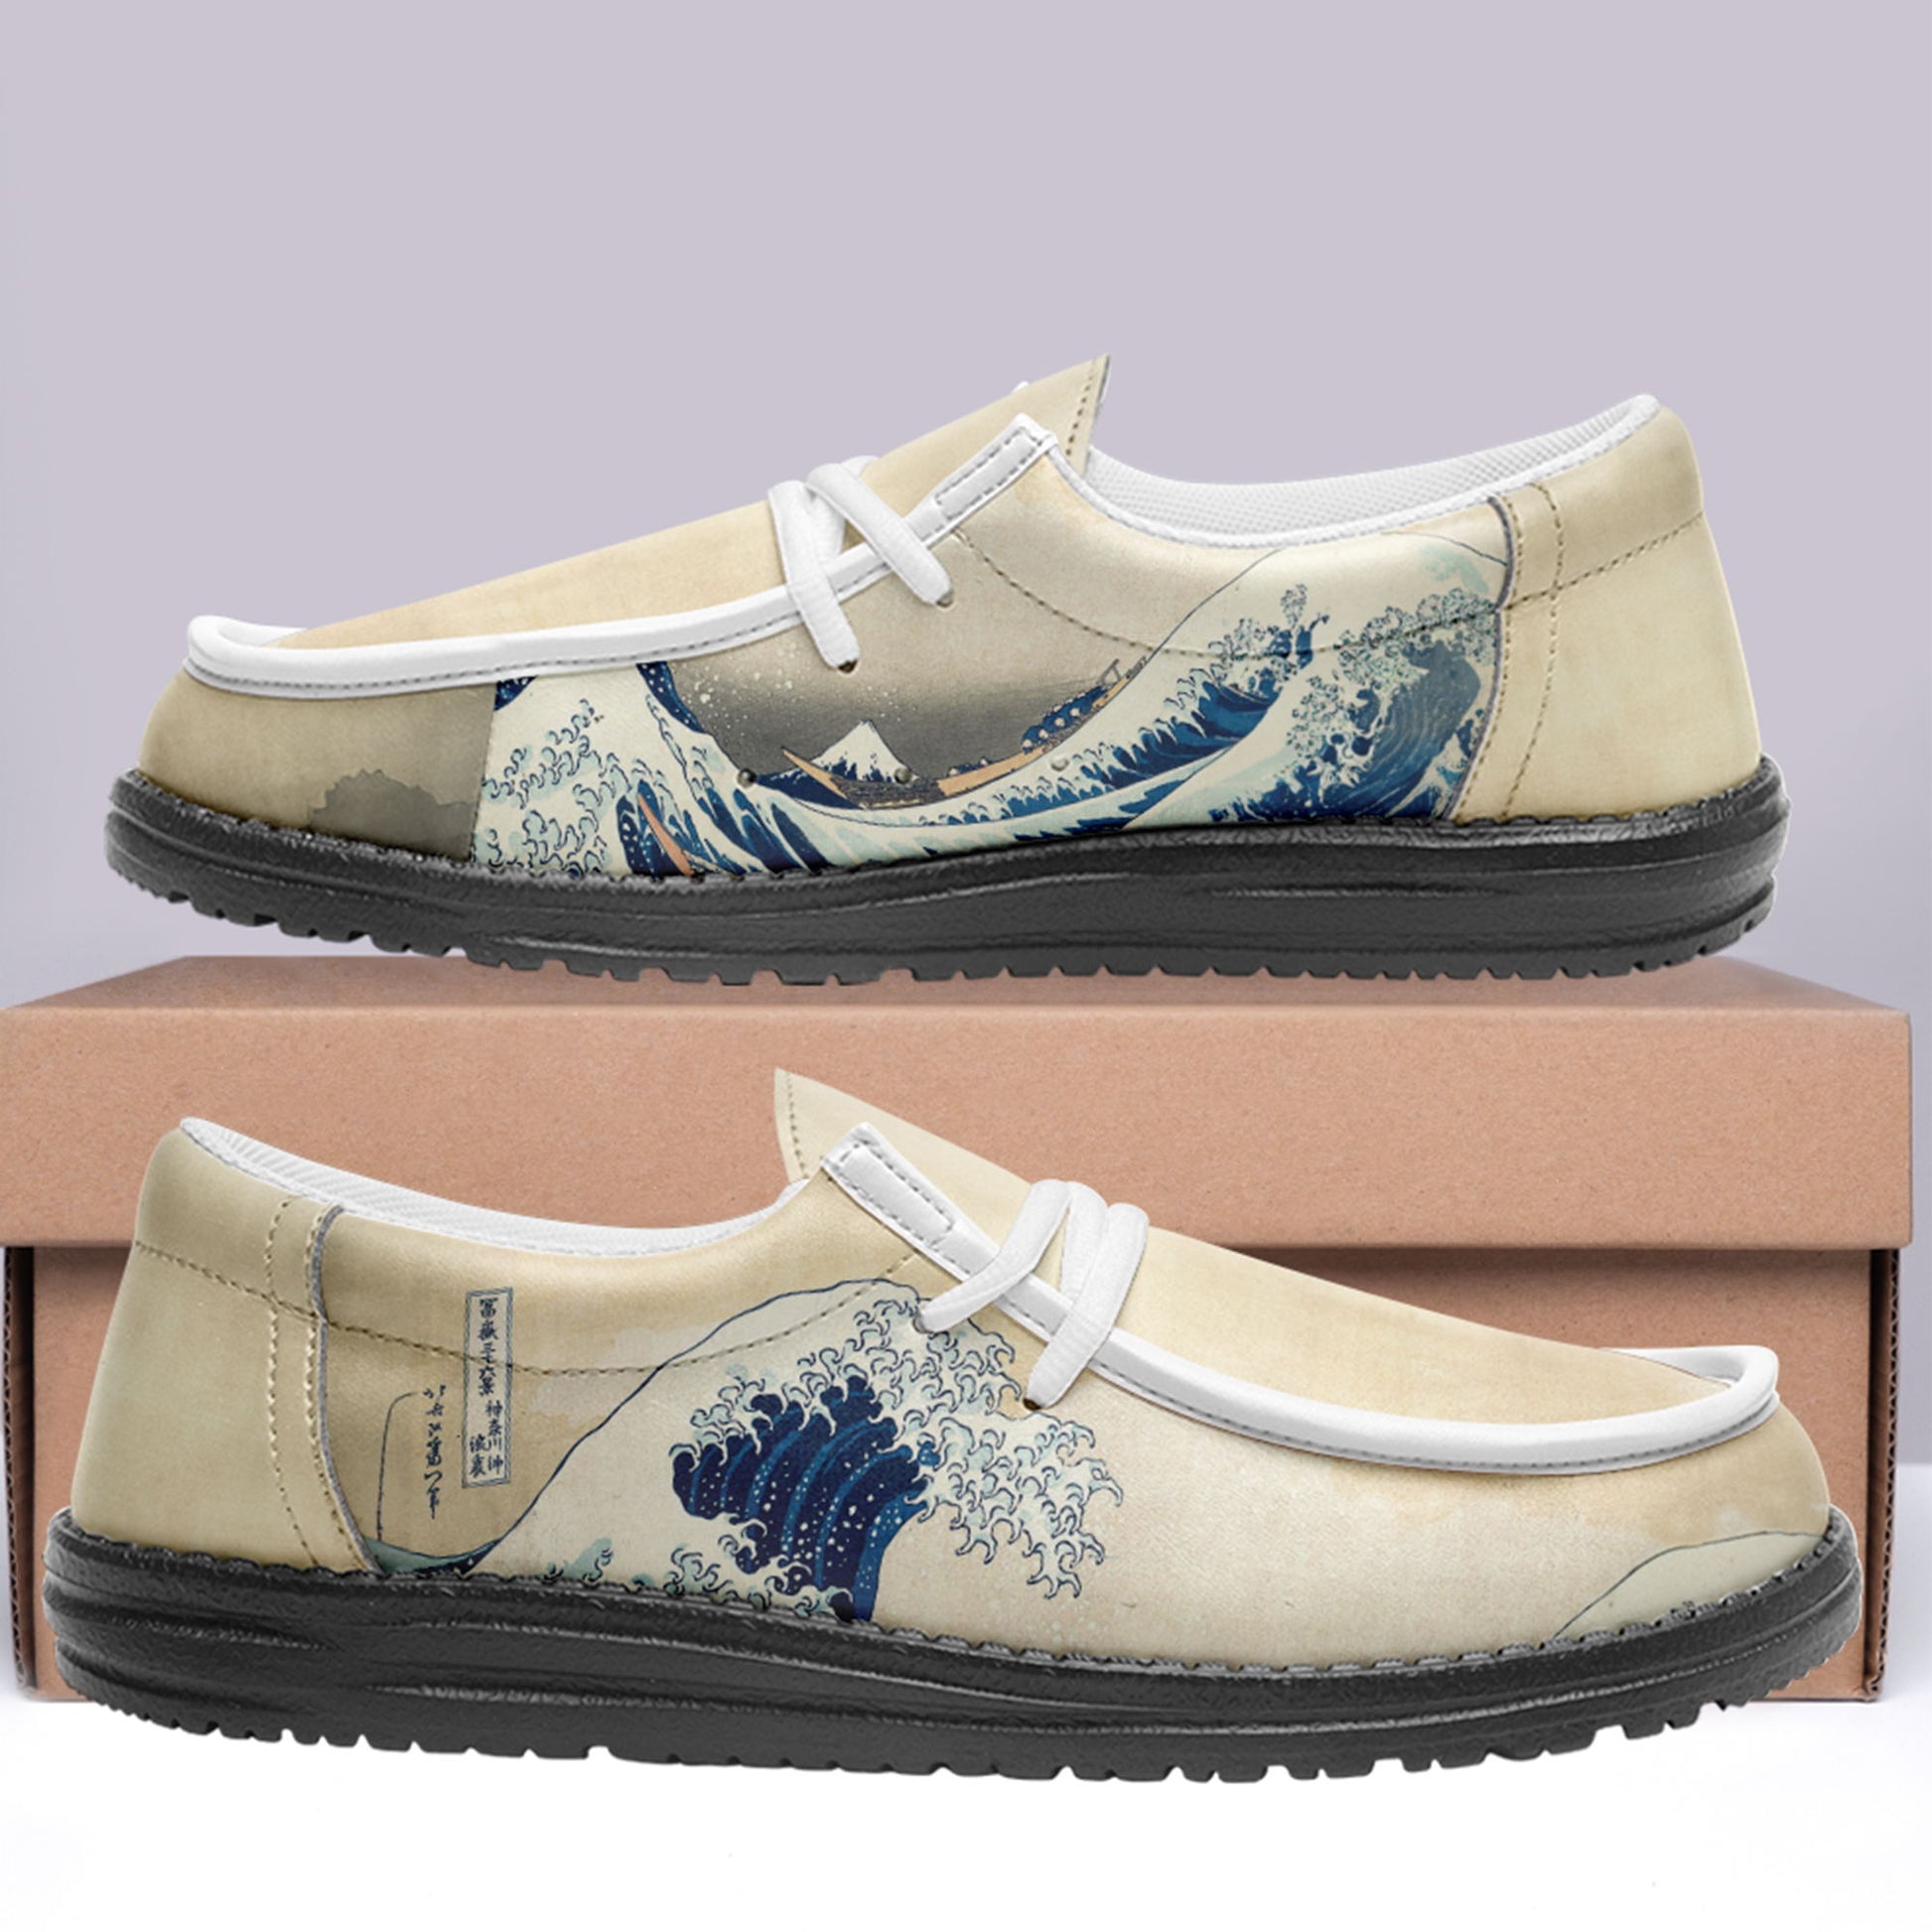 customize printed yo bro shoes ukiyo-e katsushika hokusai's the great wave off kanagawa casual shoes white shoelace 6